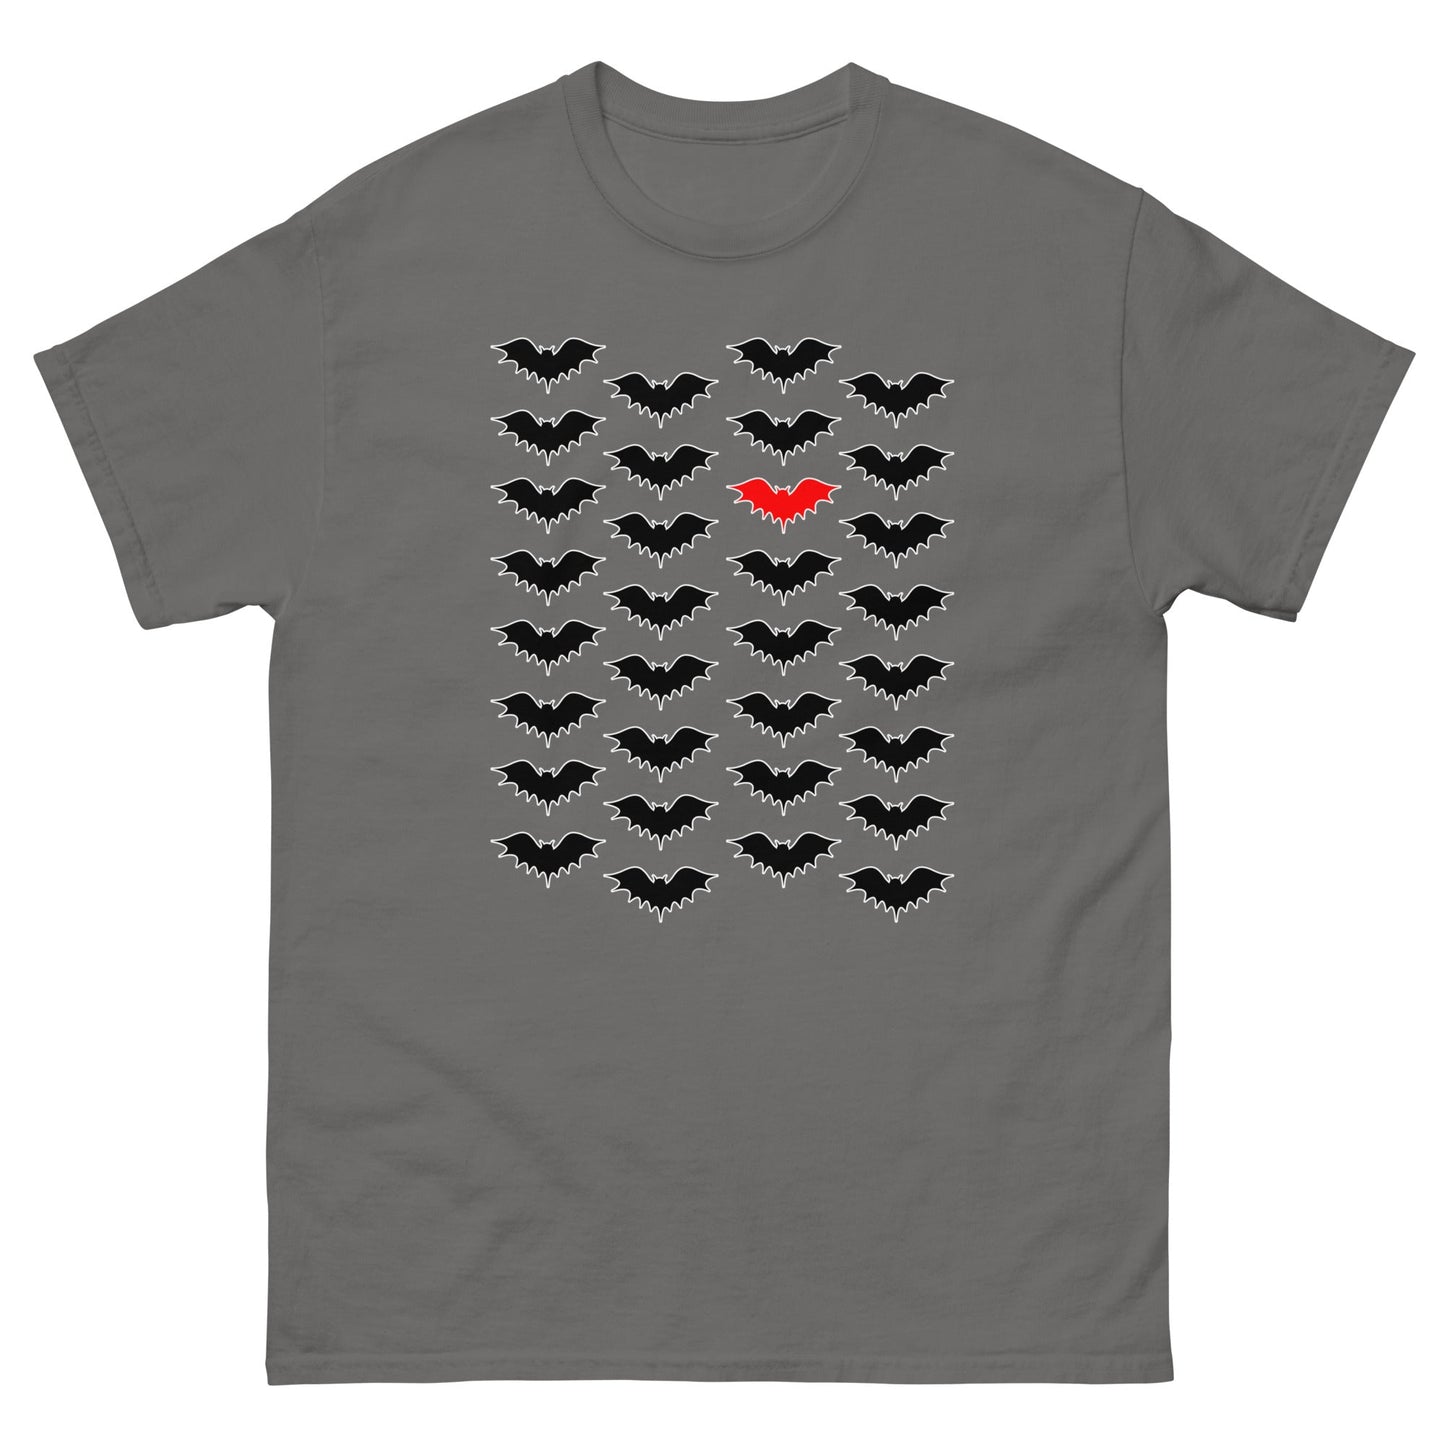 Scar Design T shirt Charcoal / S Bat Diversity T-shirt